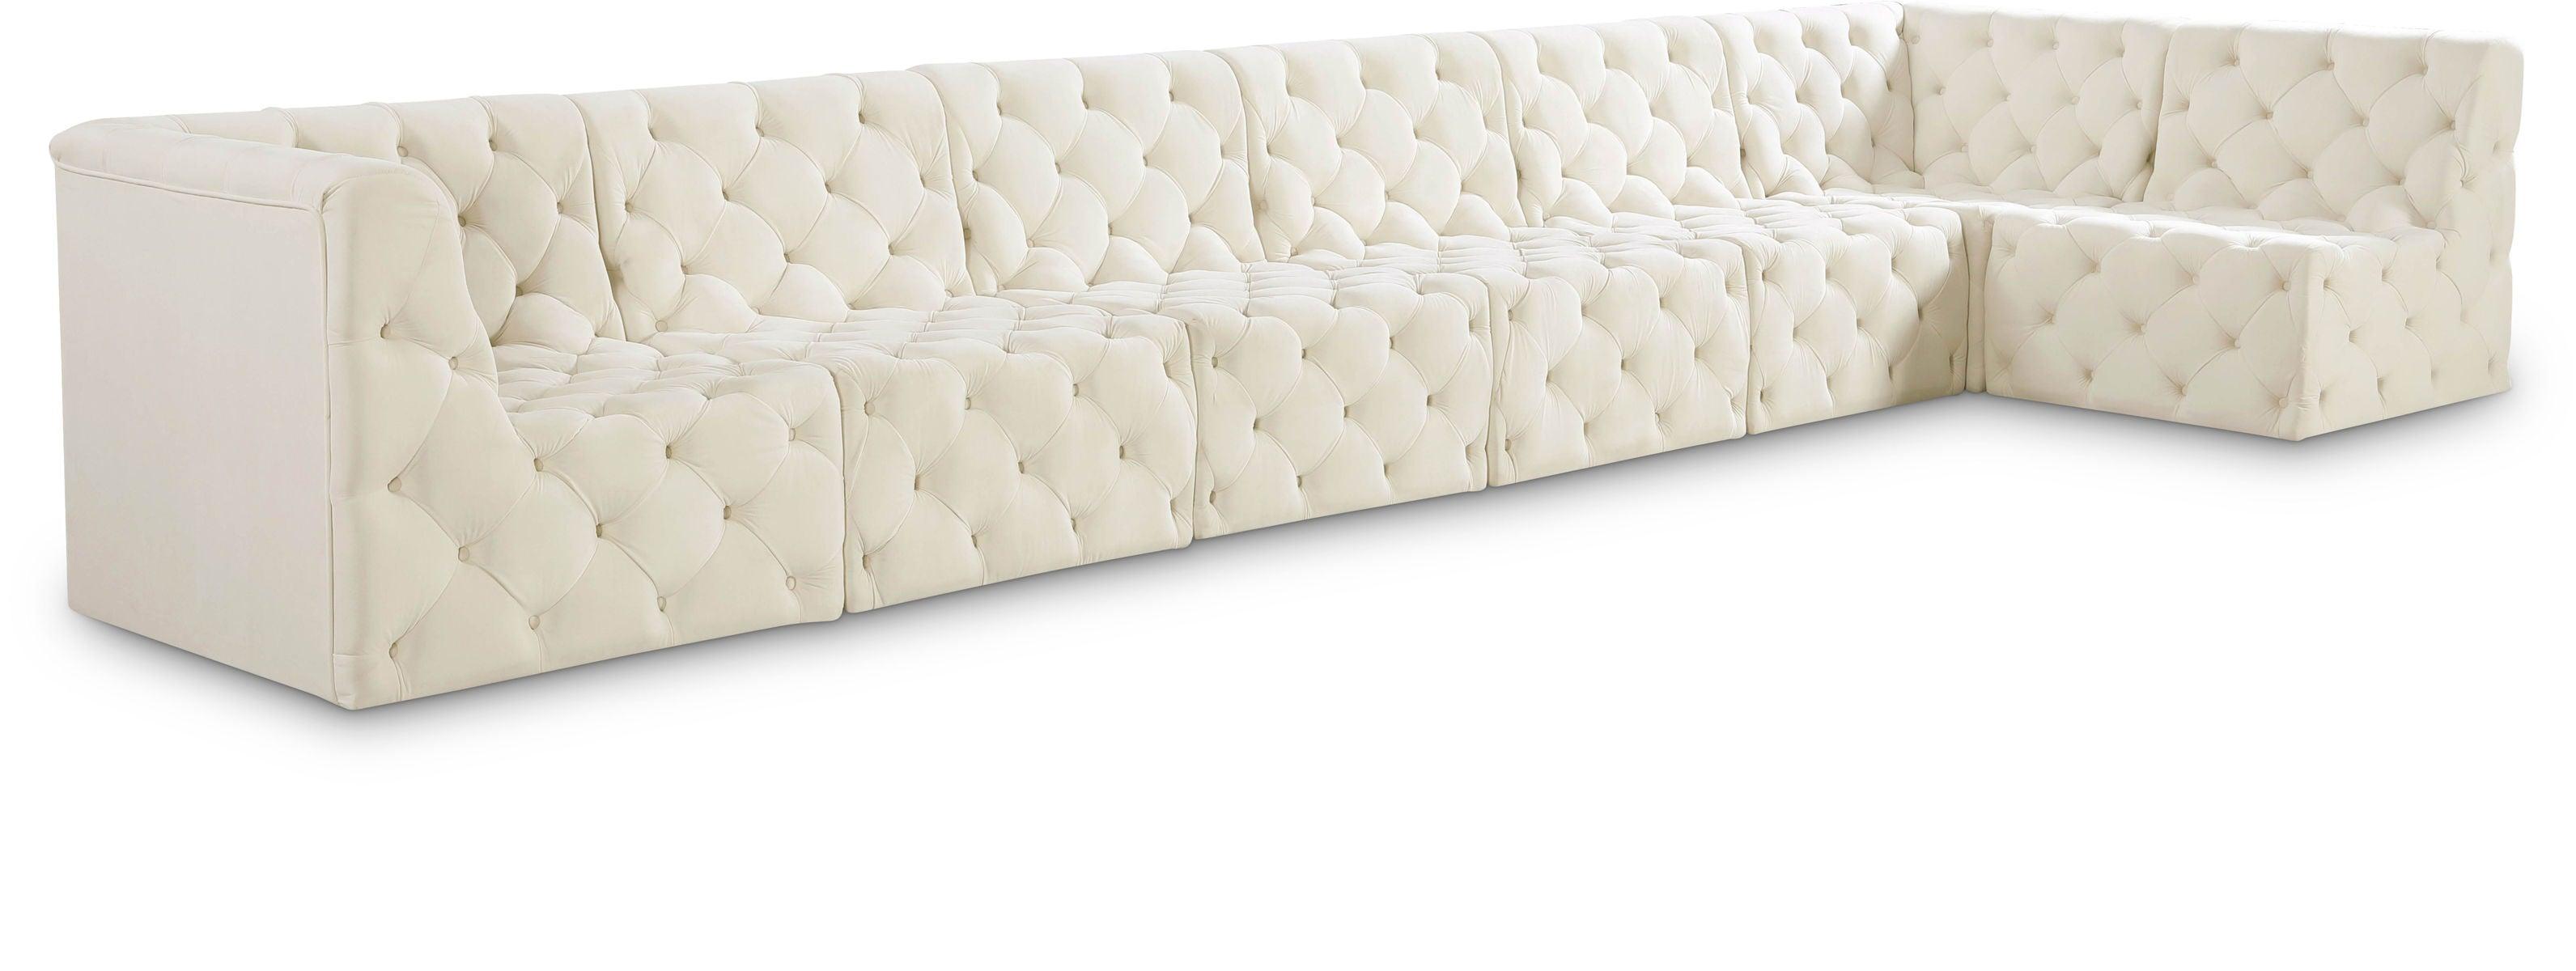 Meridian Furniture - Tuft - Modular Sectional 7 Piece - Cream - 5th Avenue Furniture